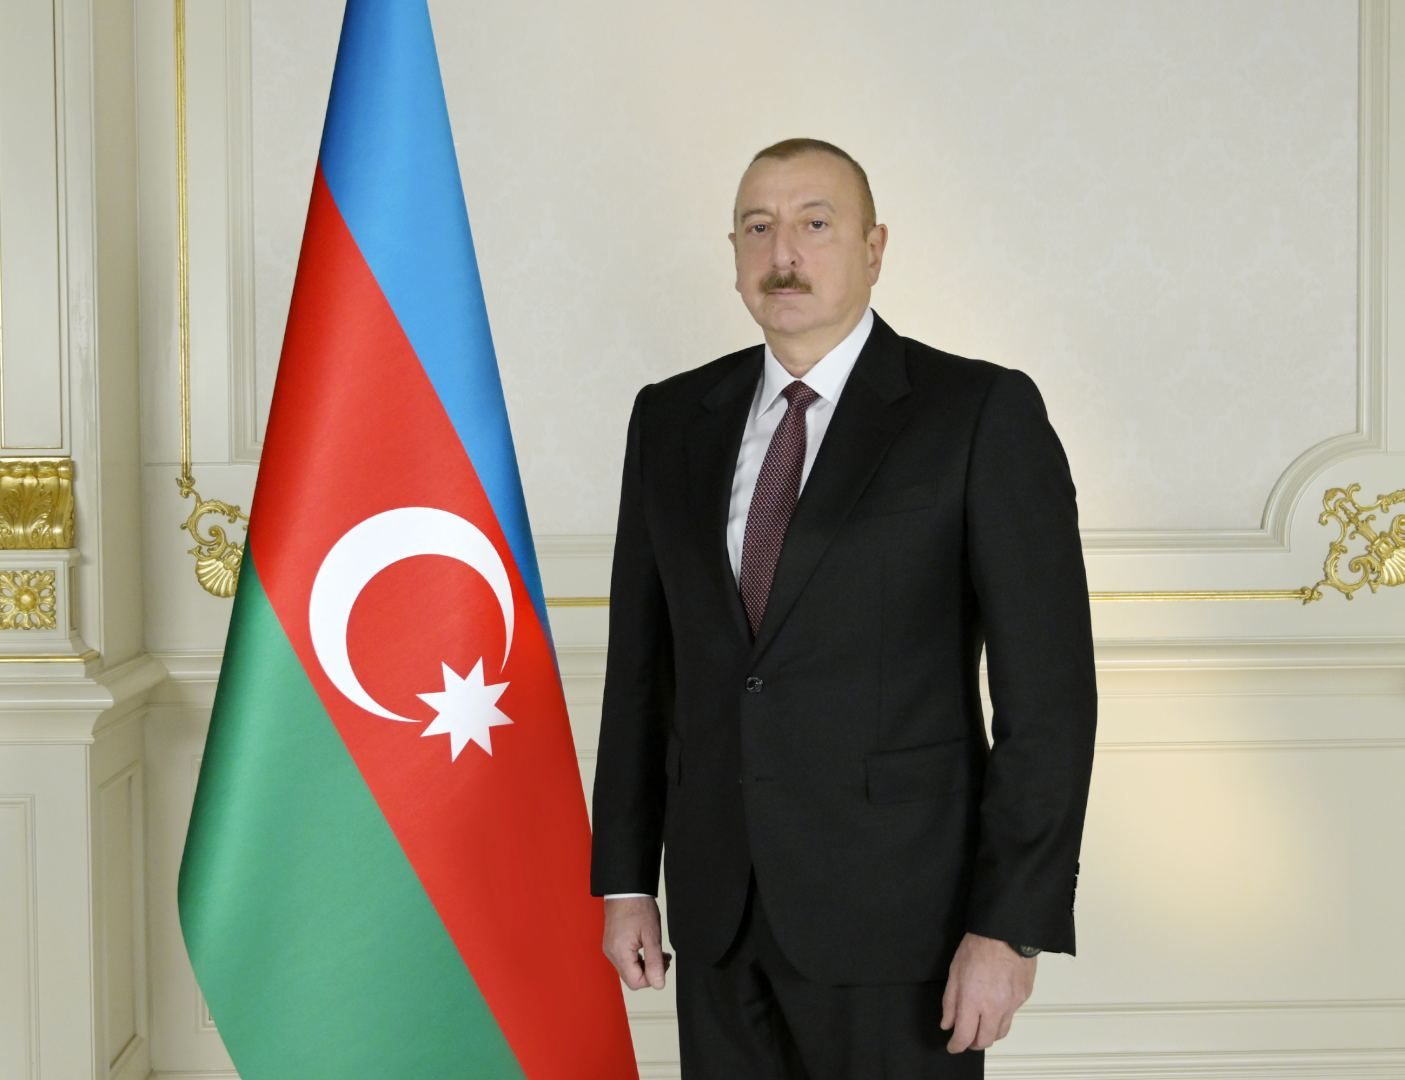 President Ilham Aliyev appoints ambassador to Ethiopia - decree